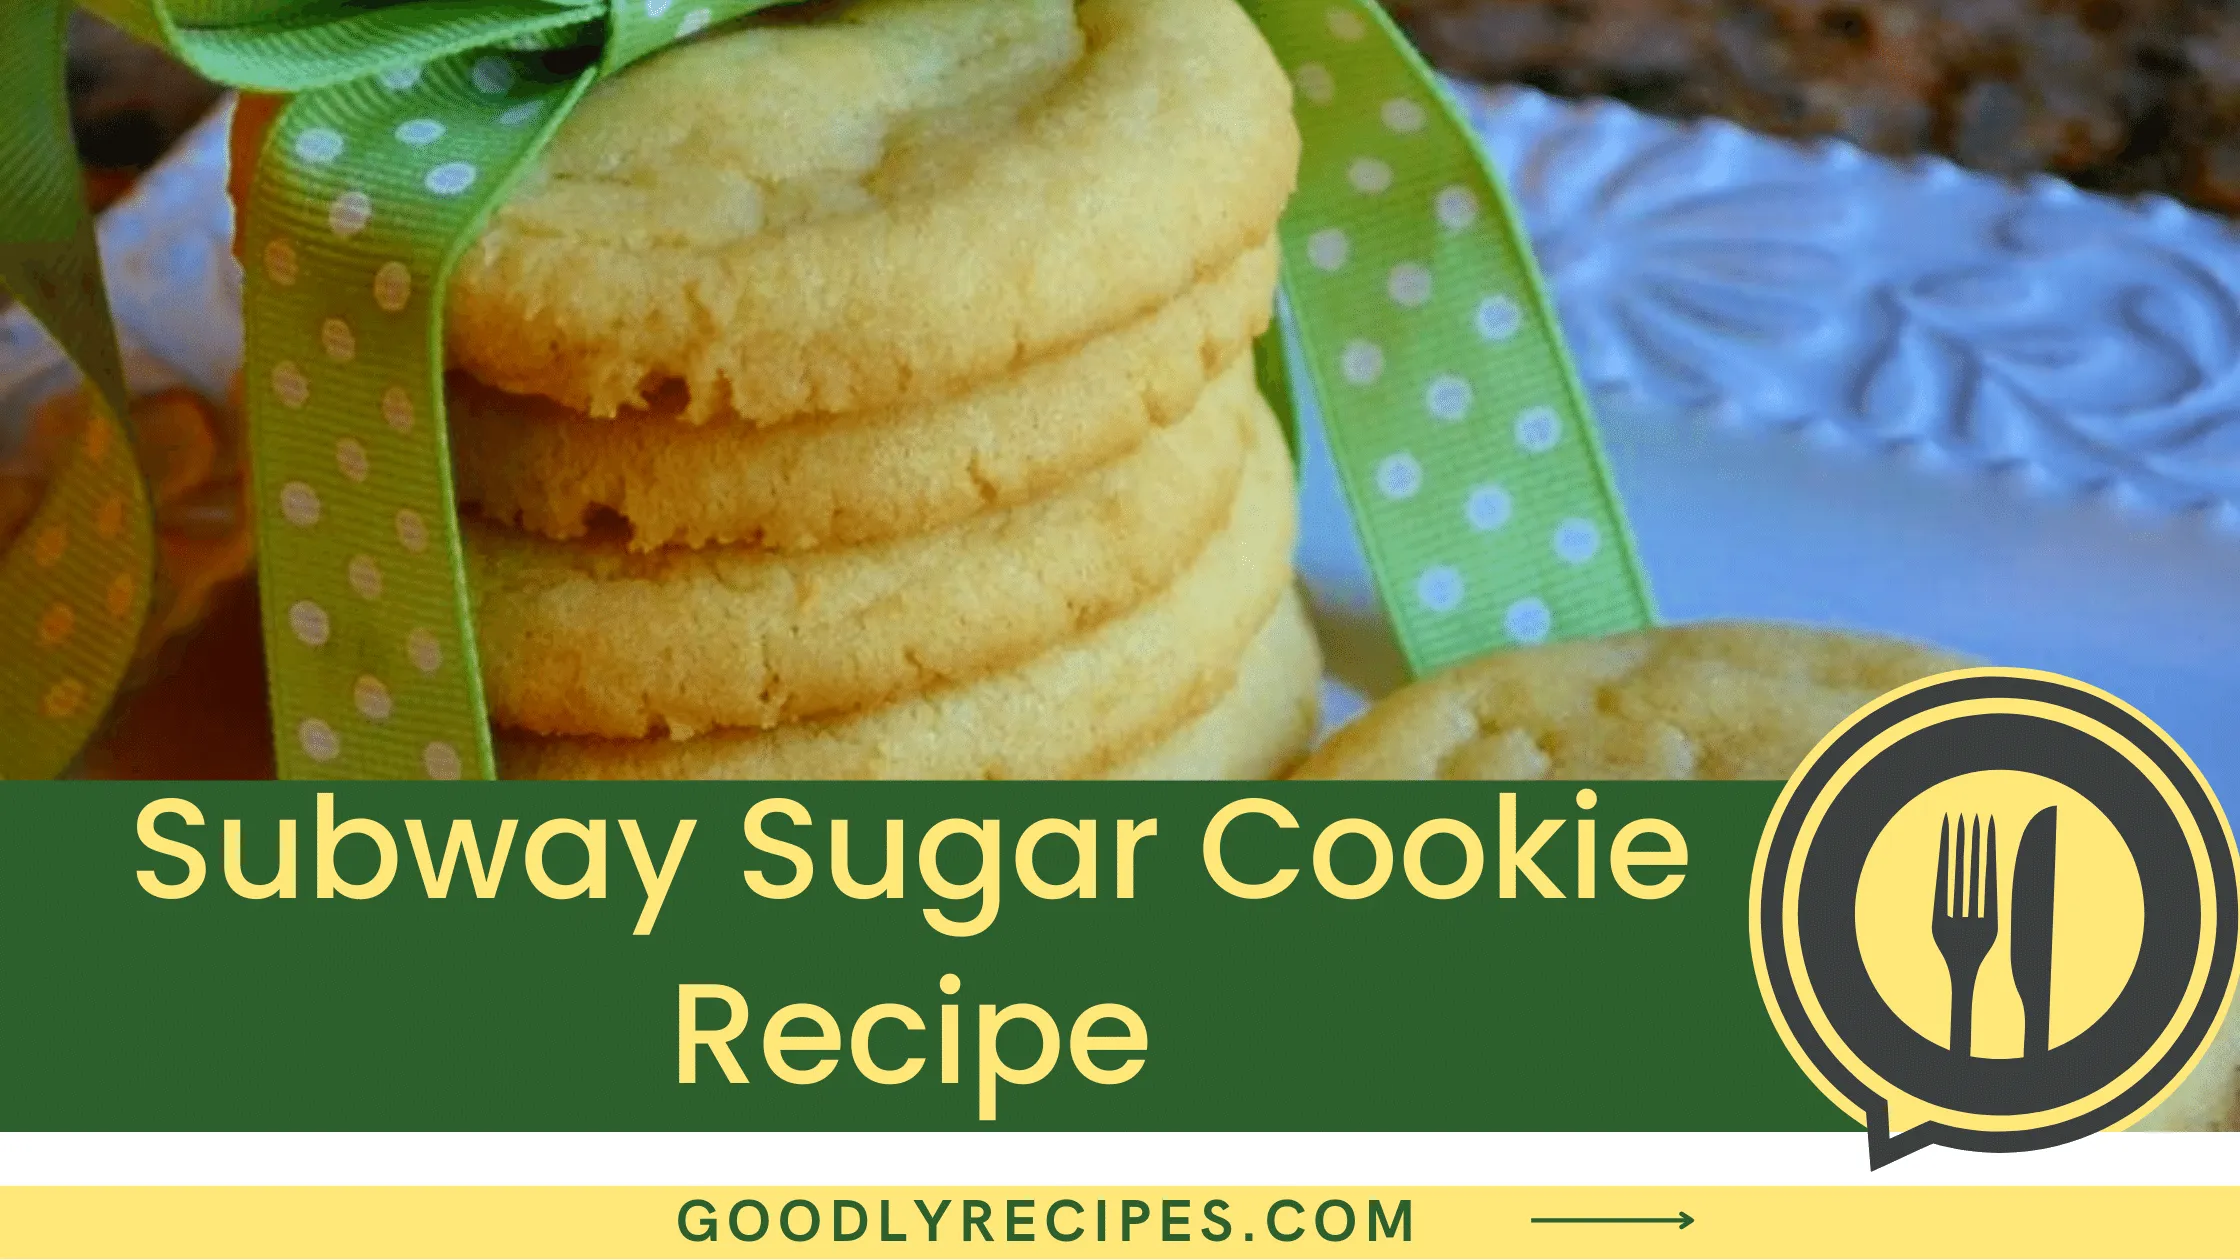 What is Subway Sugar Cookie?